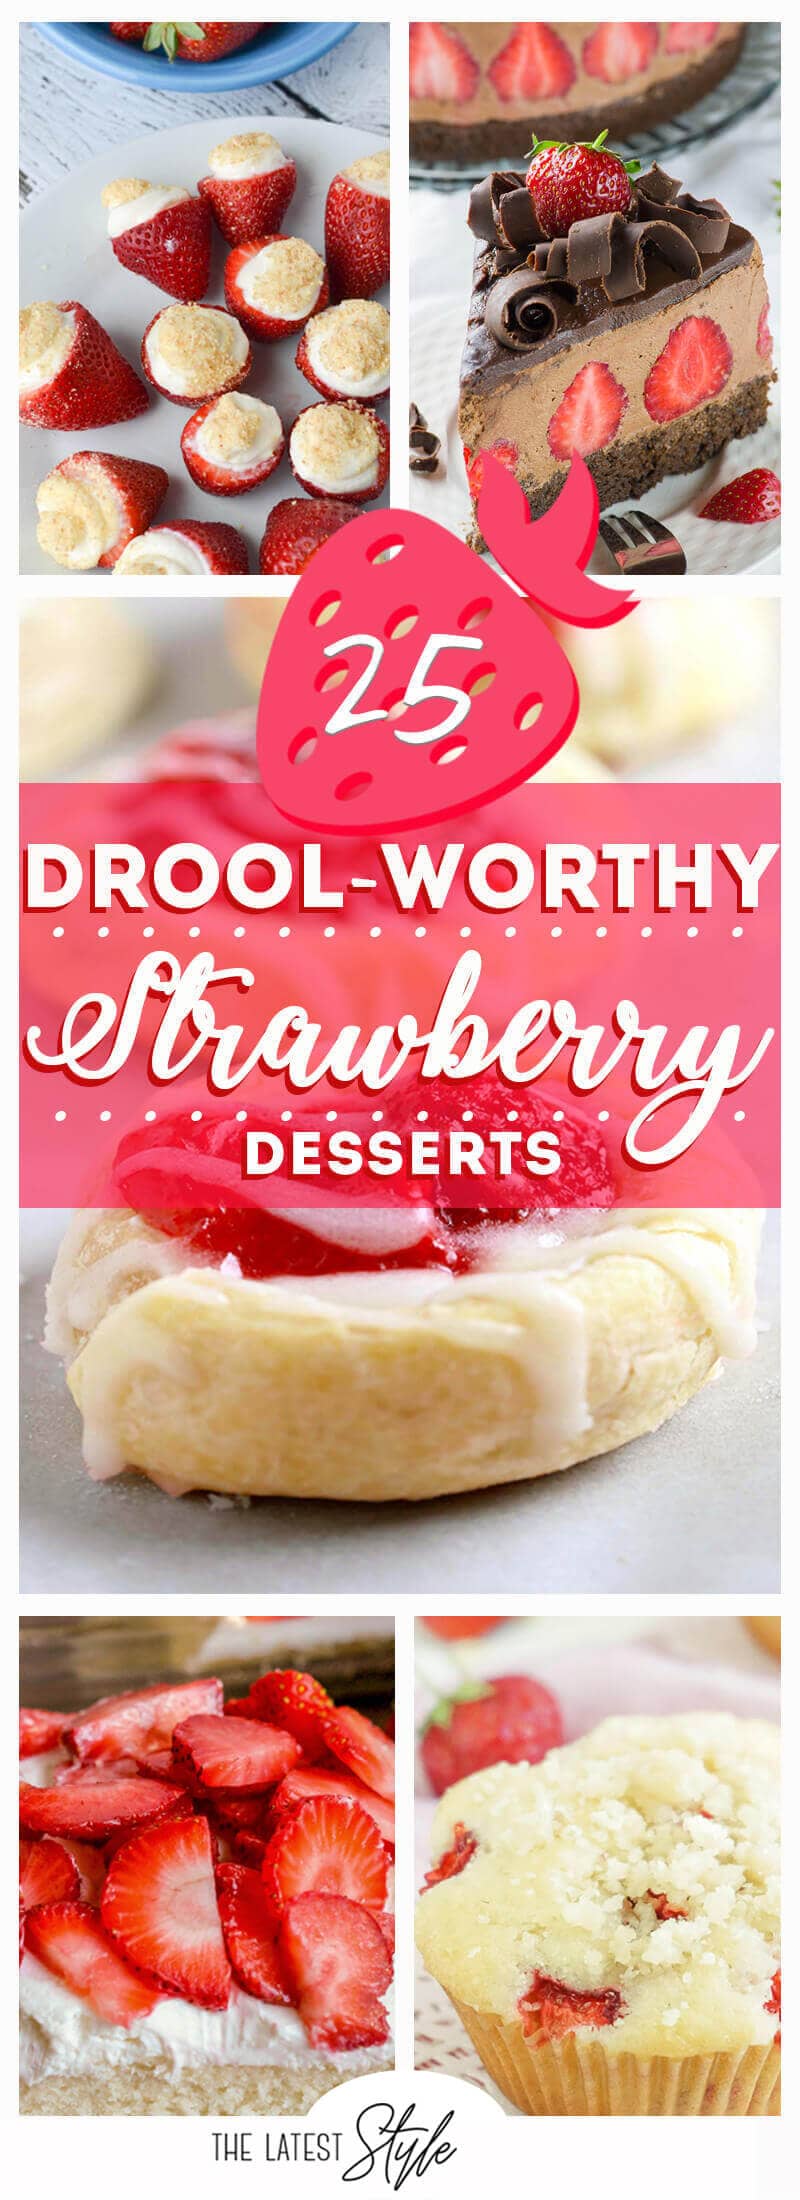 25 Drool-Worthy Strawberry Dessert Recipes